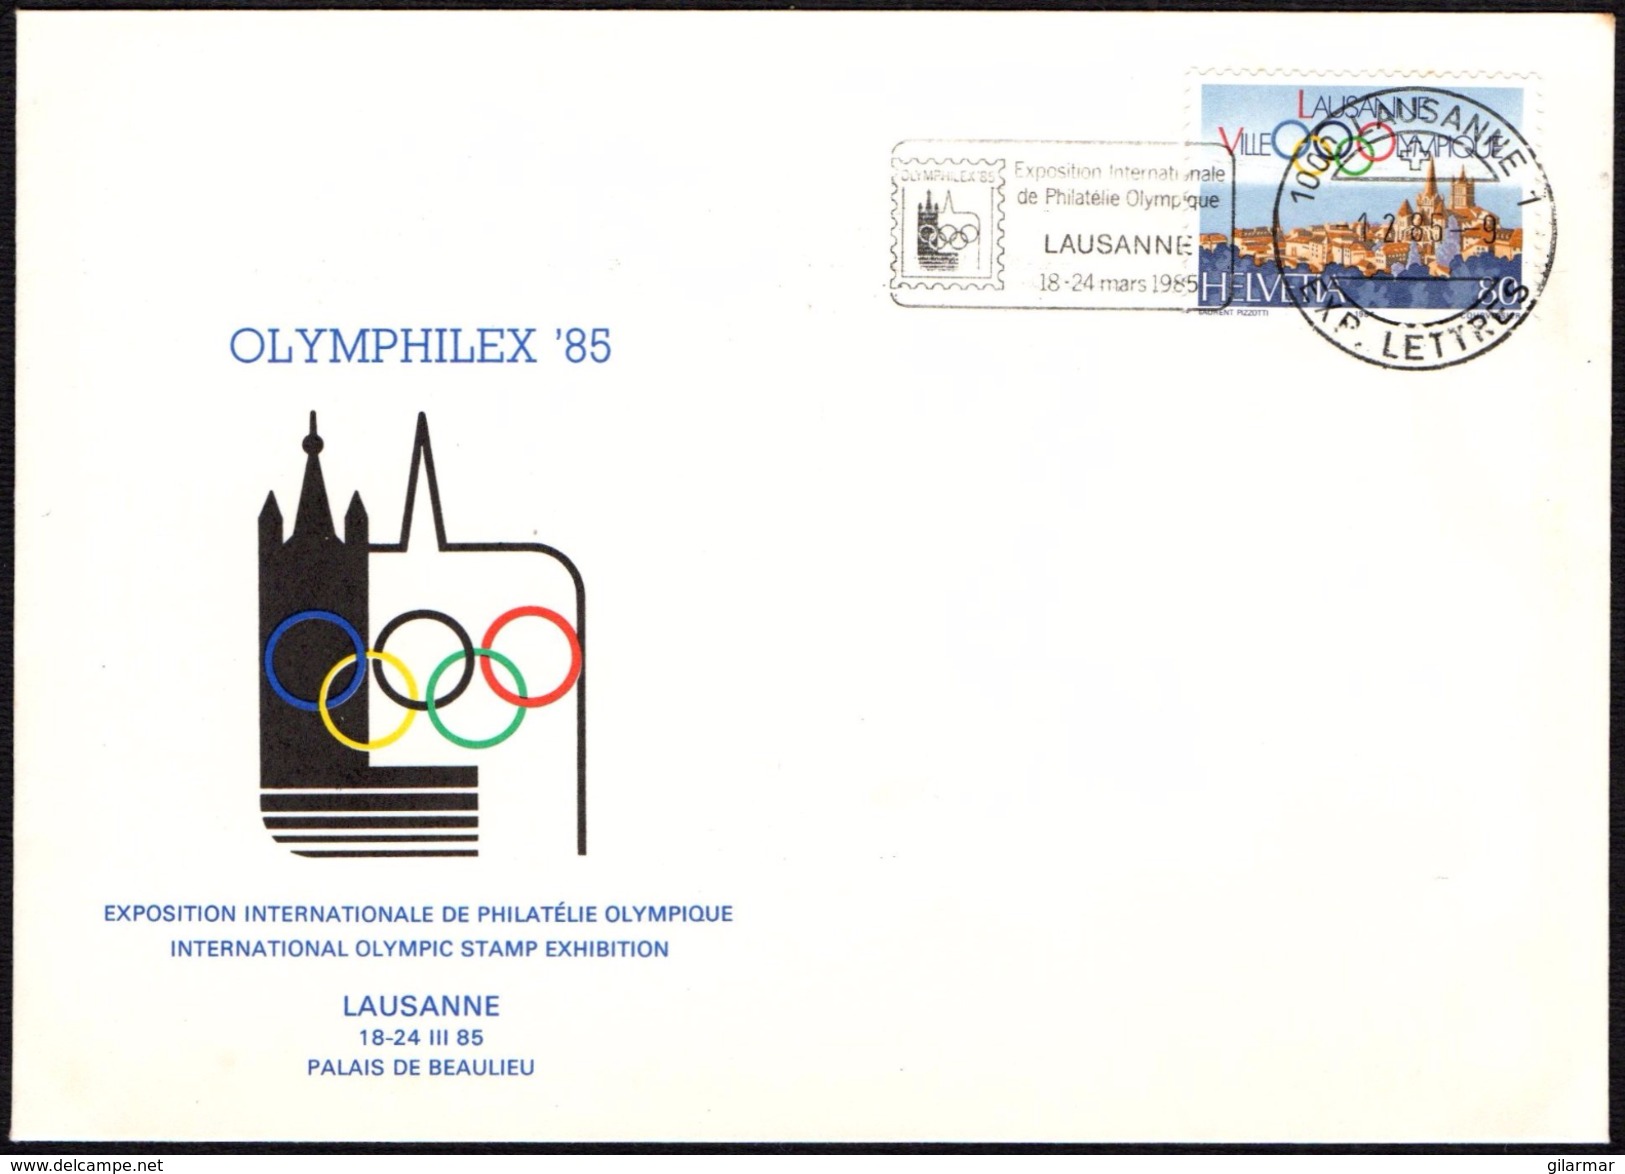 SWITZERLAND LAUSANNE 1985 - WORLD SPORT OLYMPIC PHILATELIC EXHIBITION "OLYMPHILEX '85" - OFFICIAL ENVELOPE - Estate 1988: Seul